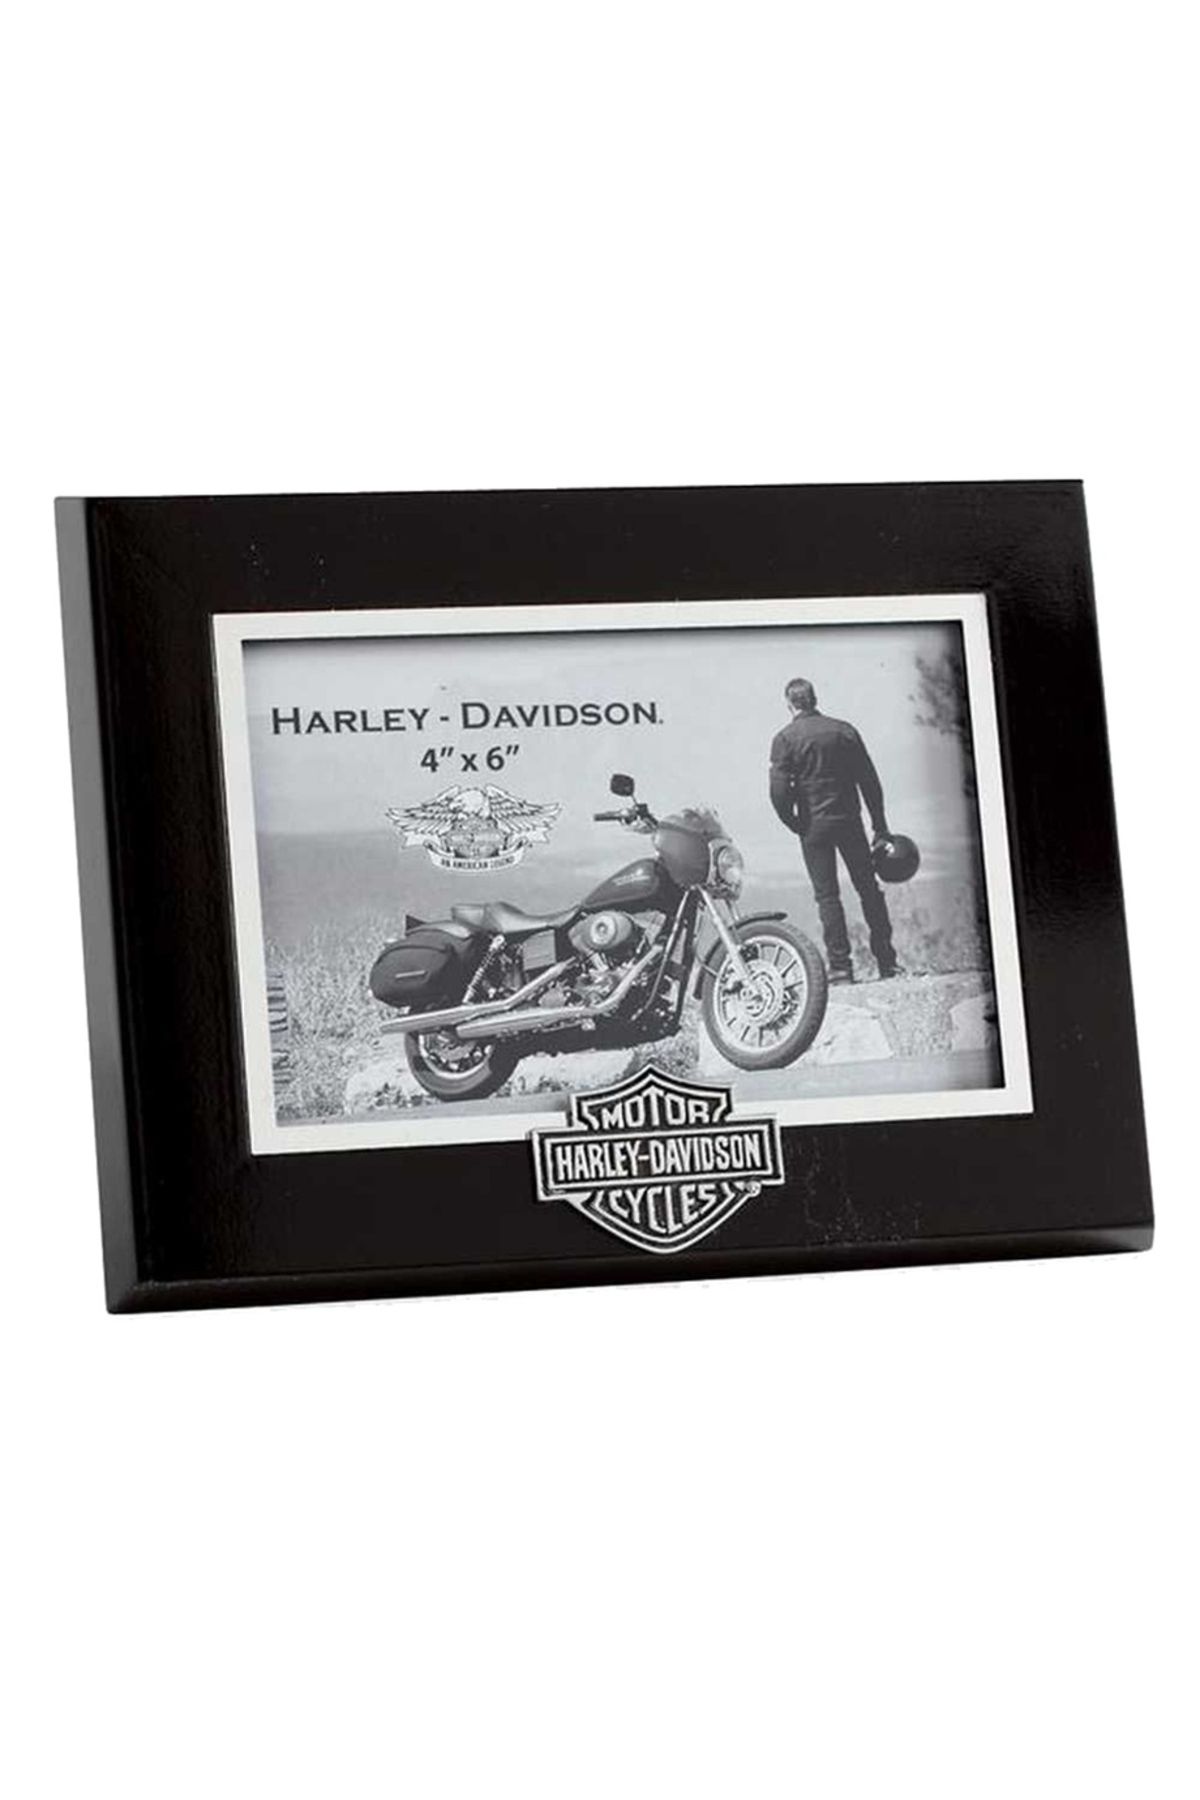 Harley Davidson Harley-davidson Bar & Shield Logo Picture Frame, Black Wood